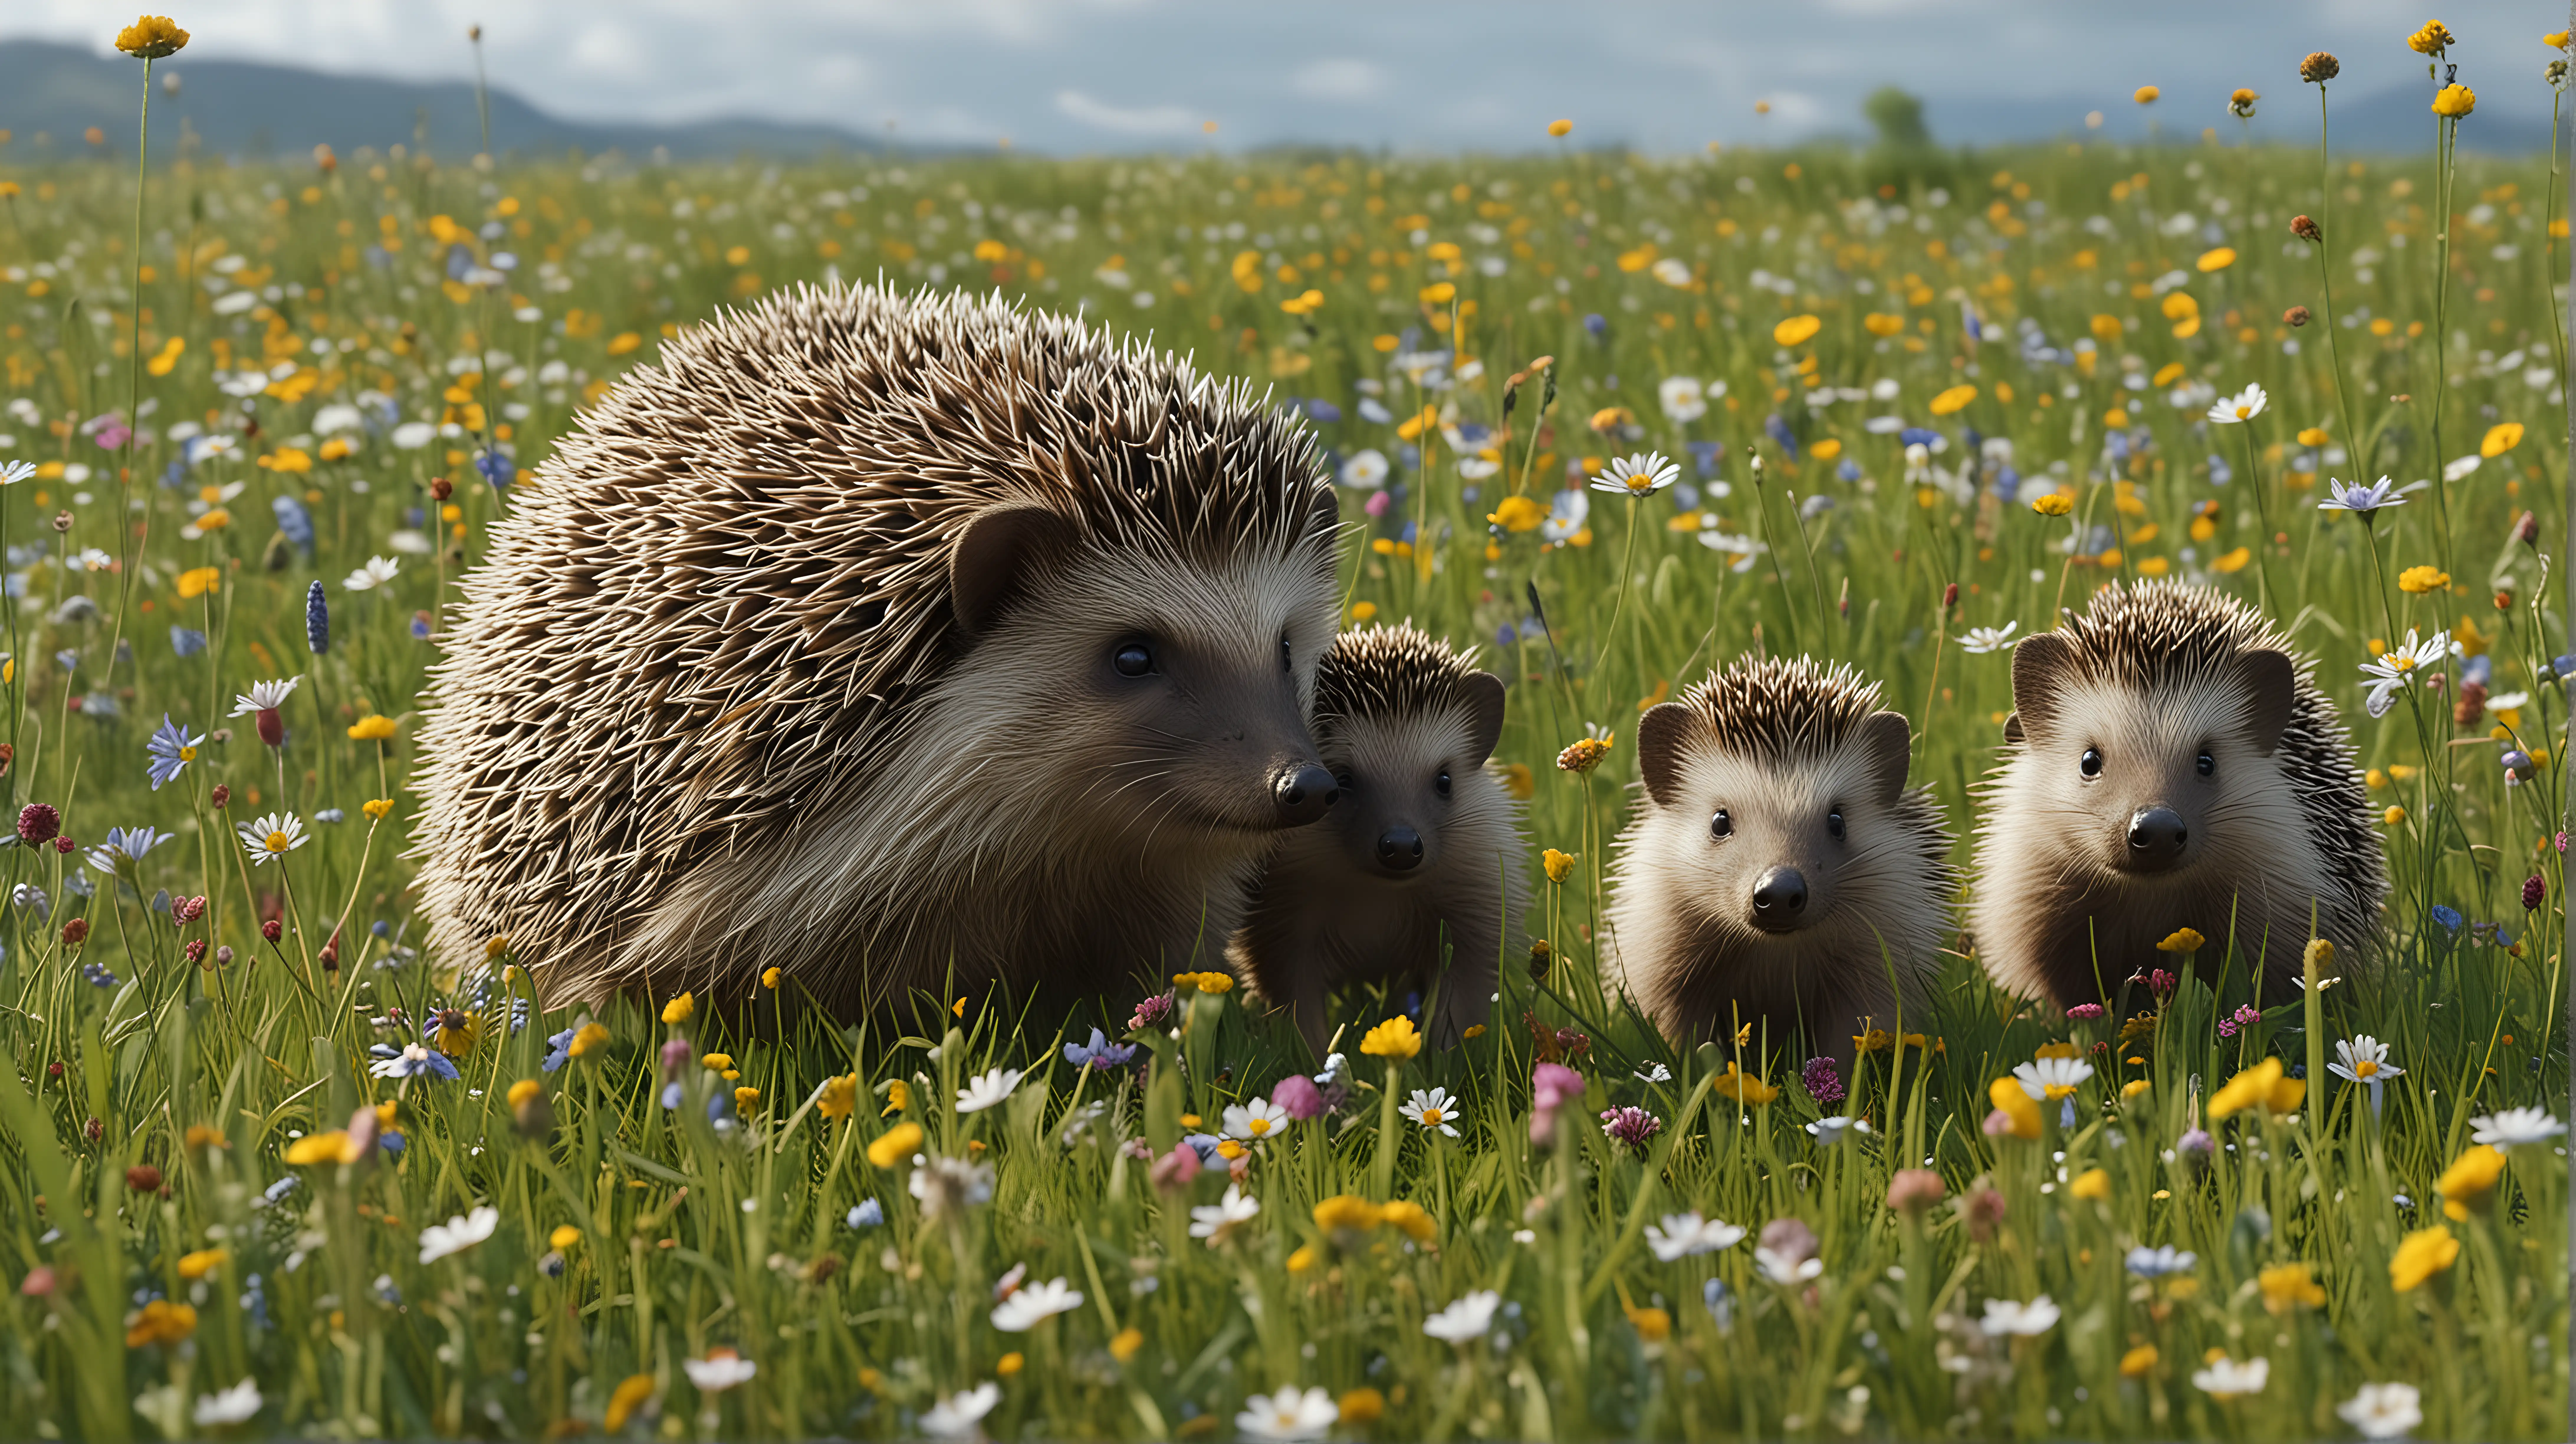 Hedgehog Family Among Wildflowers HyperRealistic 4K Nature Scene